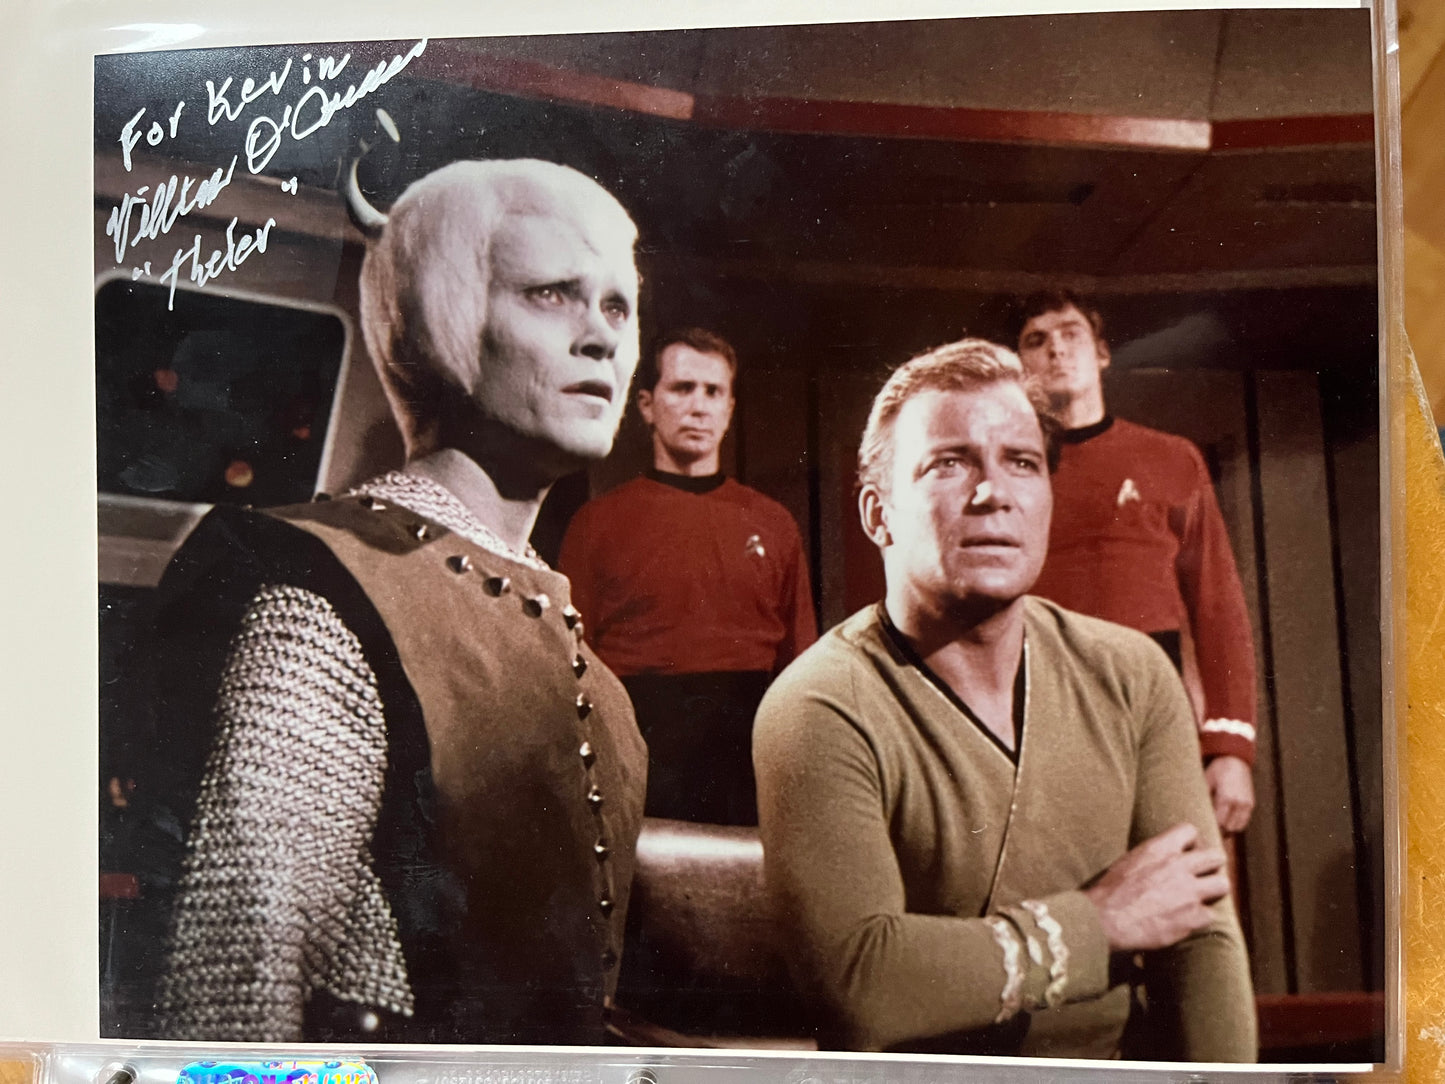 WILLIAM O'CONNELL, Star Trek, autograph